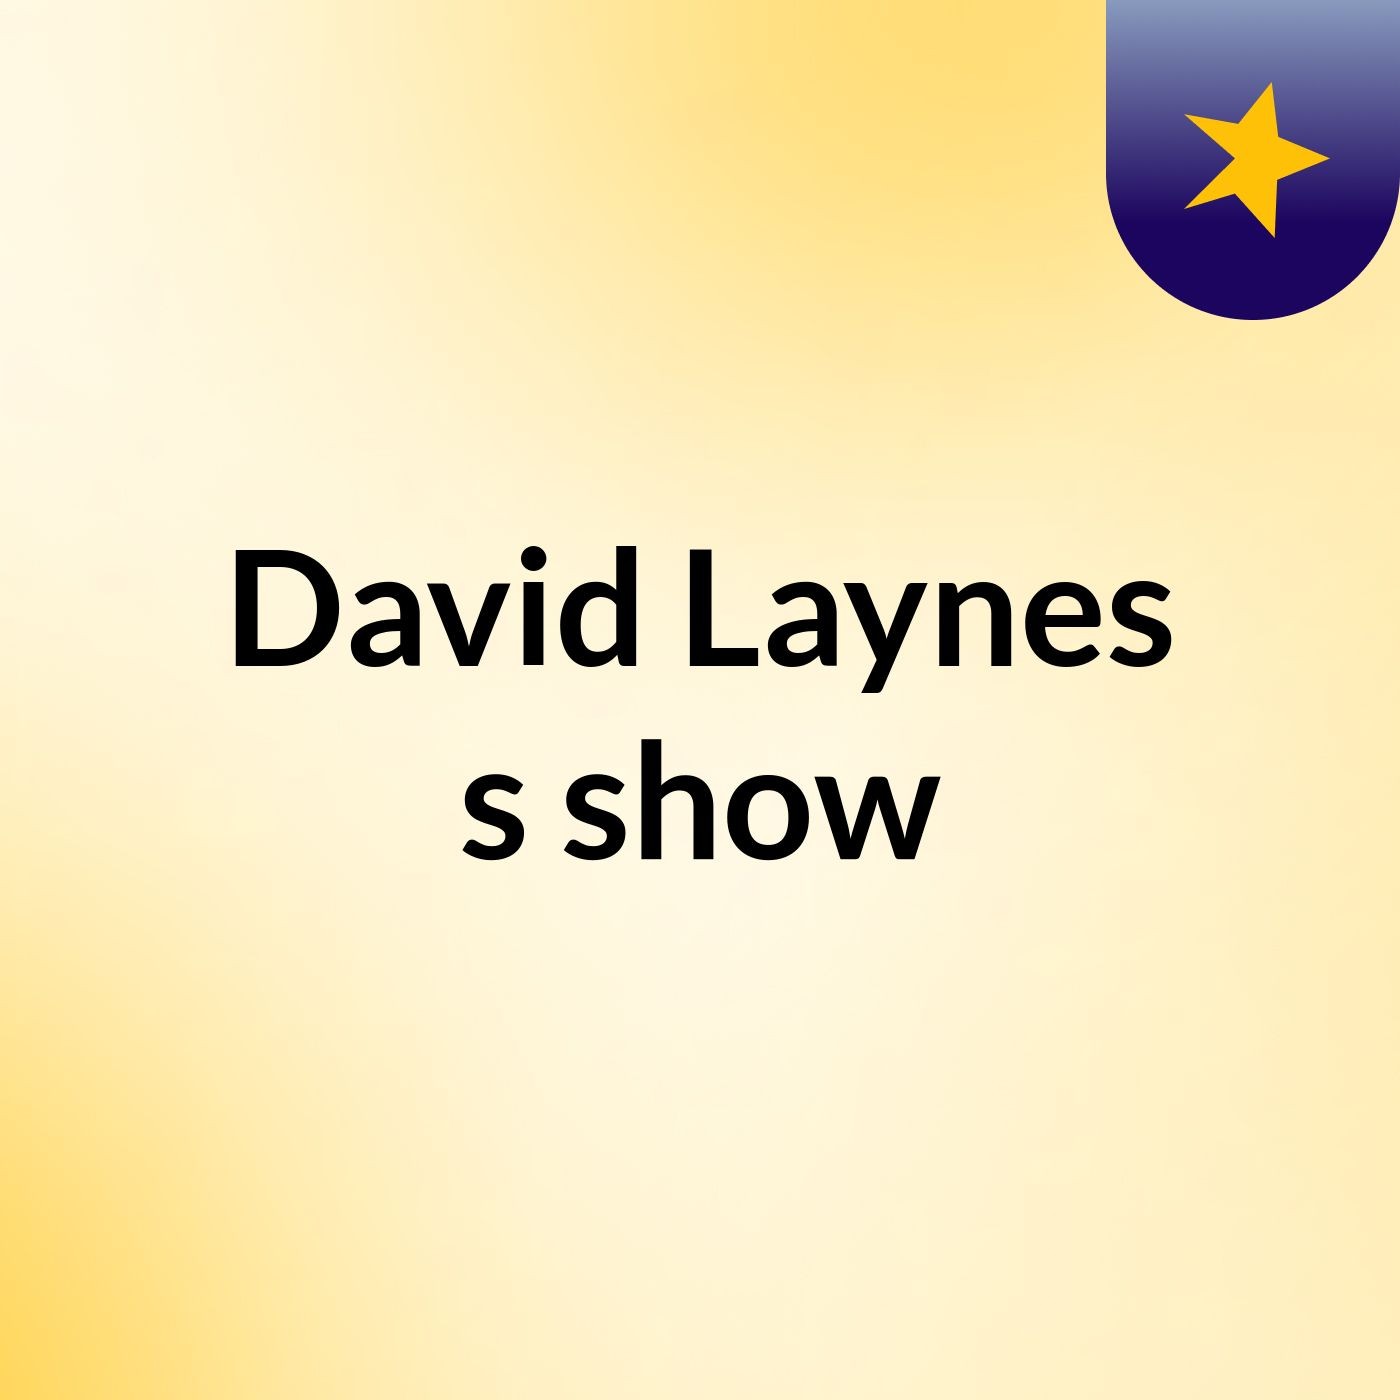 David Laynes's show